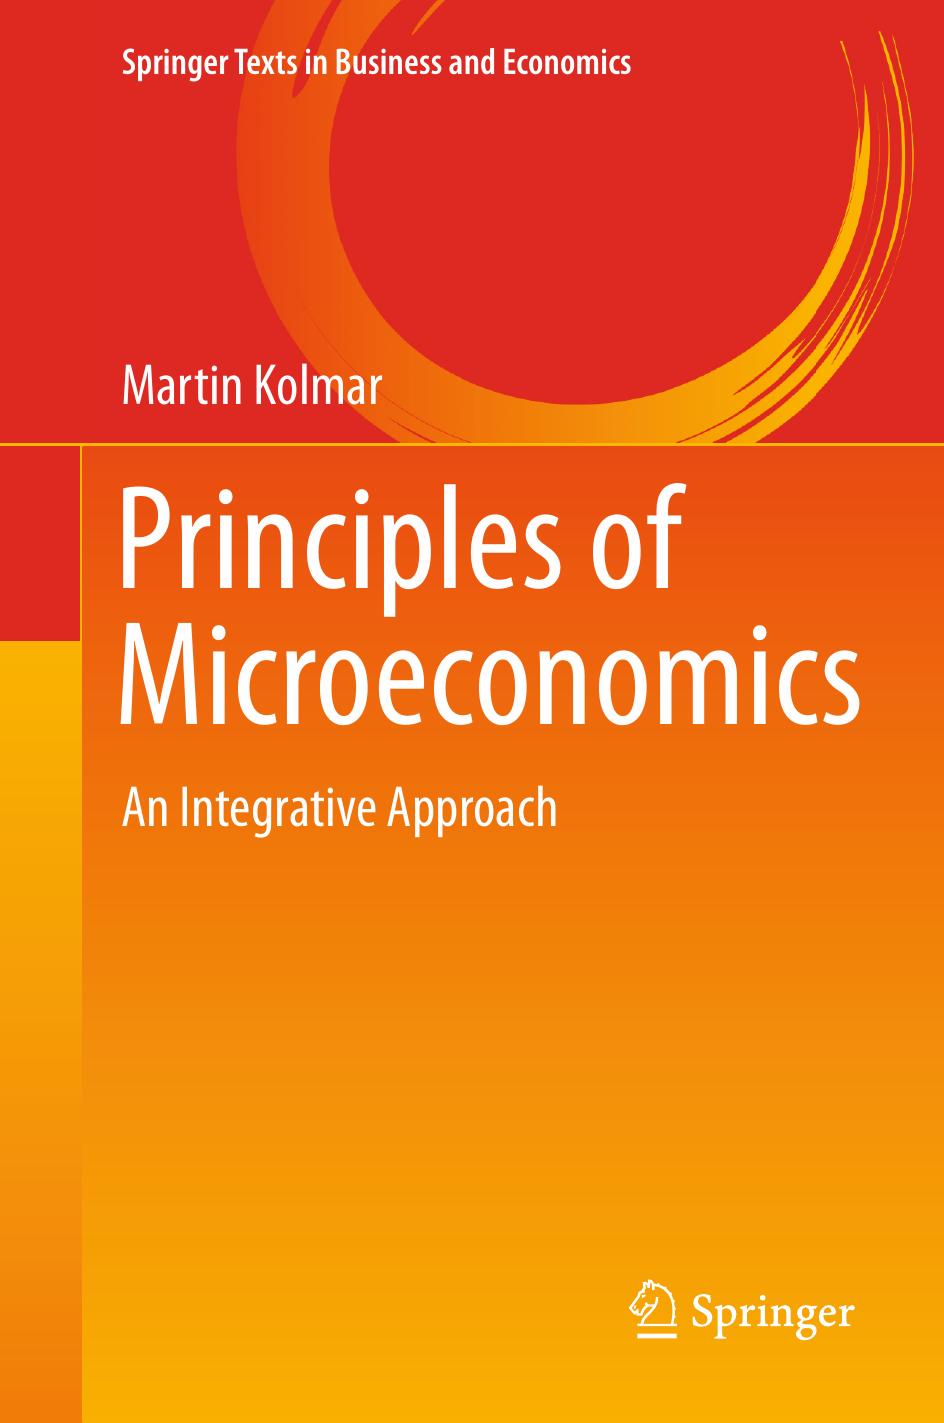 Principles of microeconomics an integrative approach 2017